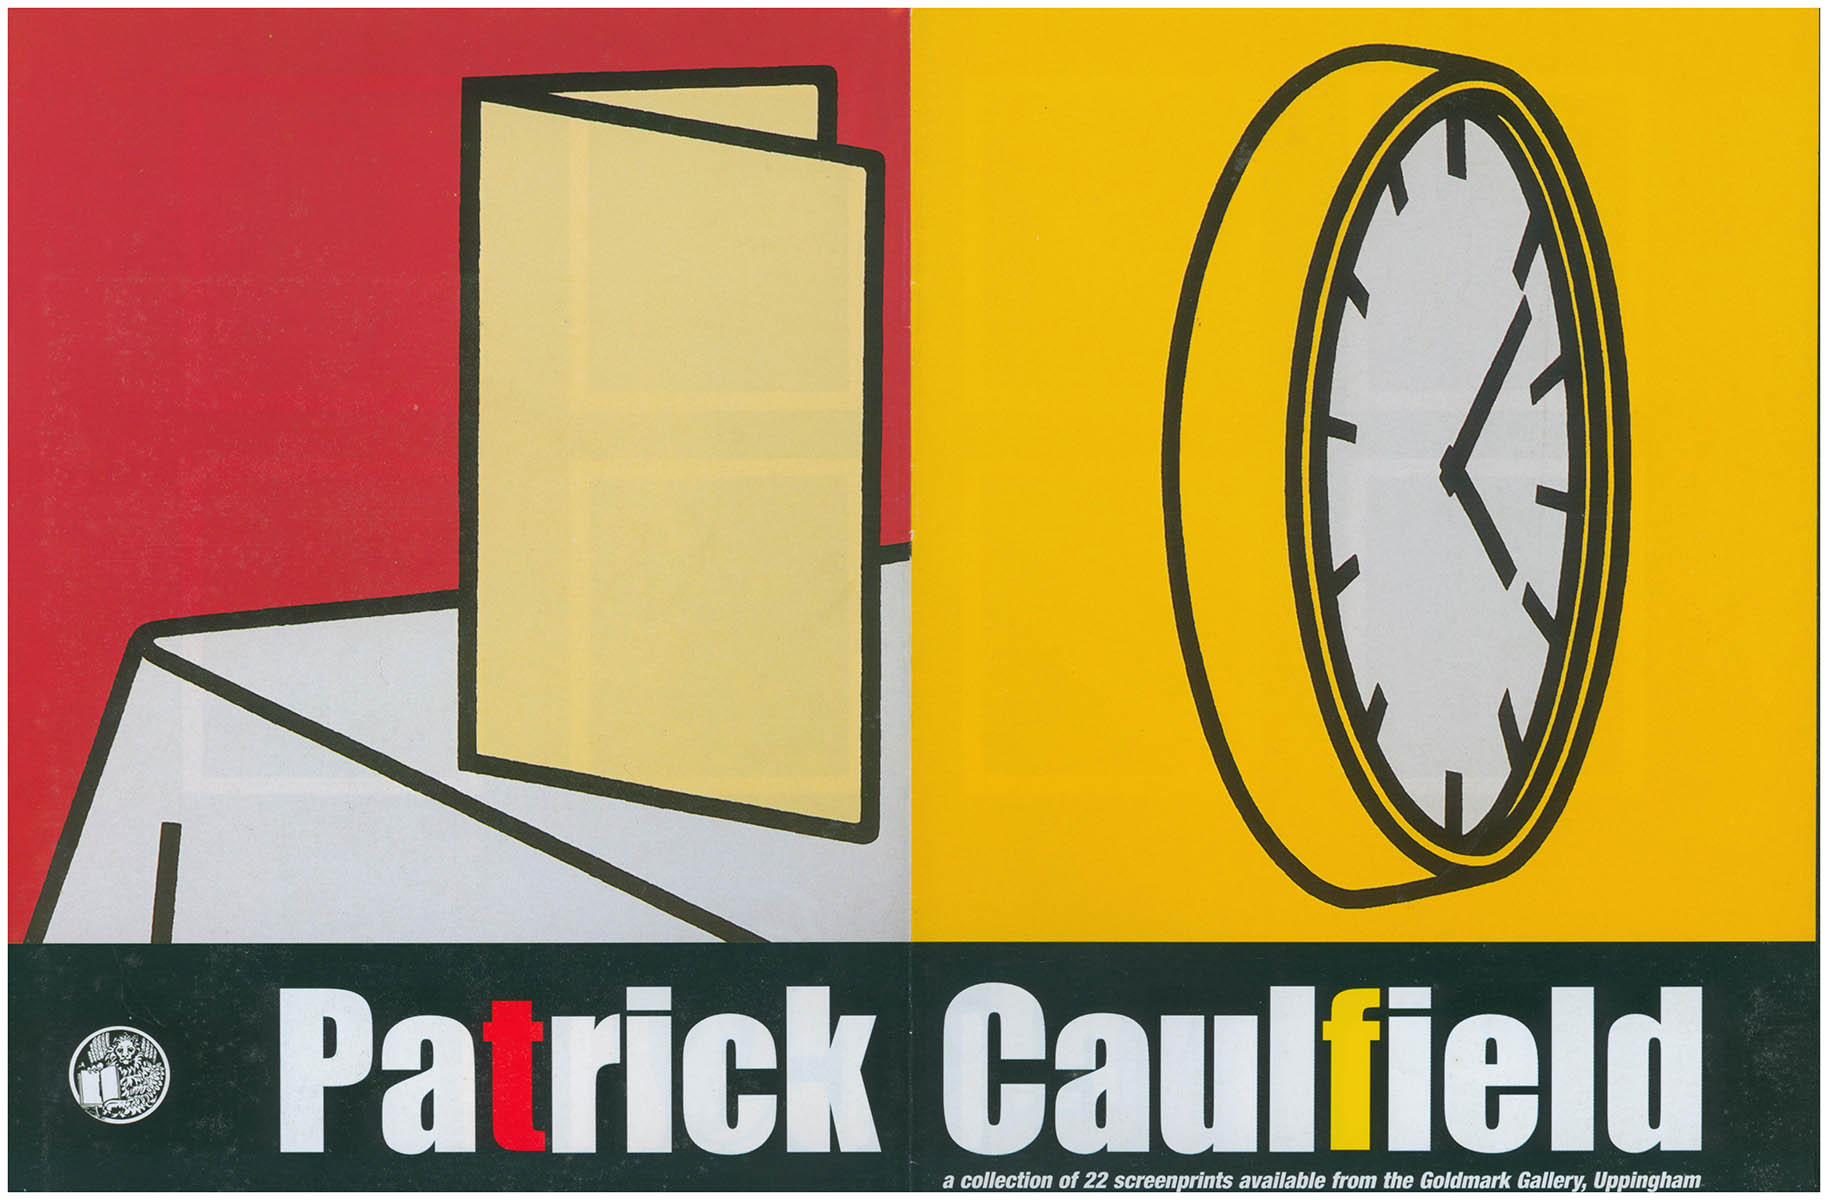 Caulfield, Patrick - Advertising for Patrick Caulfield (Goldmark Gallery)